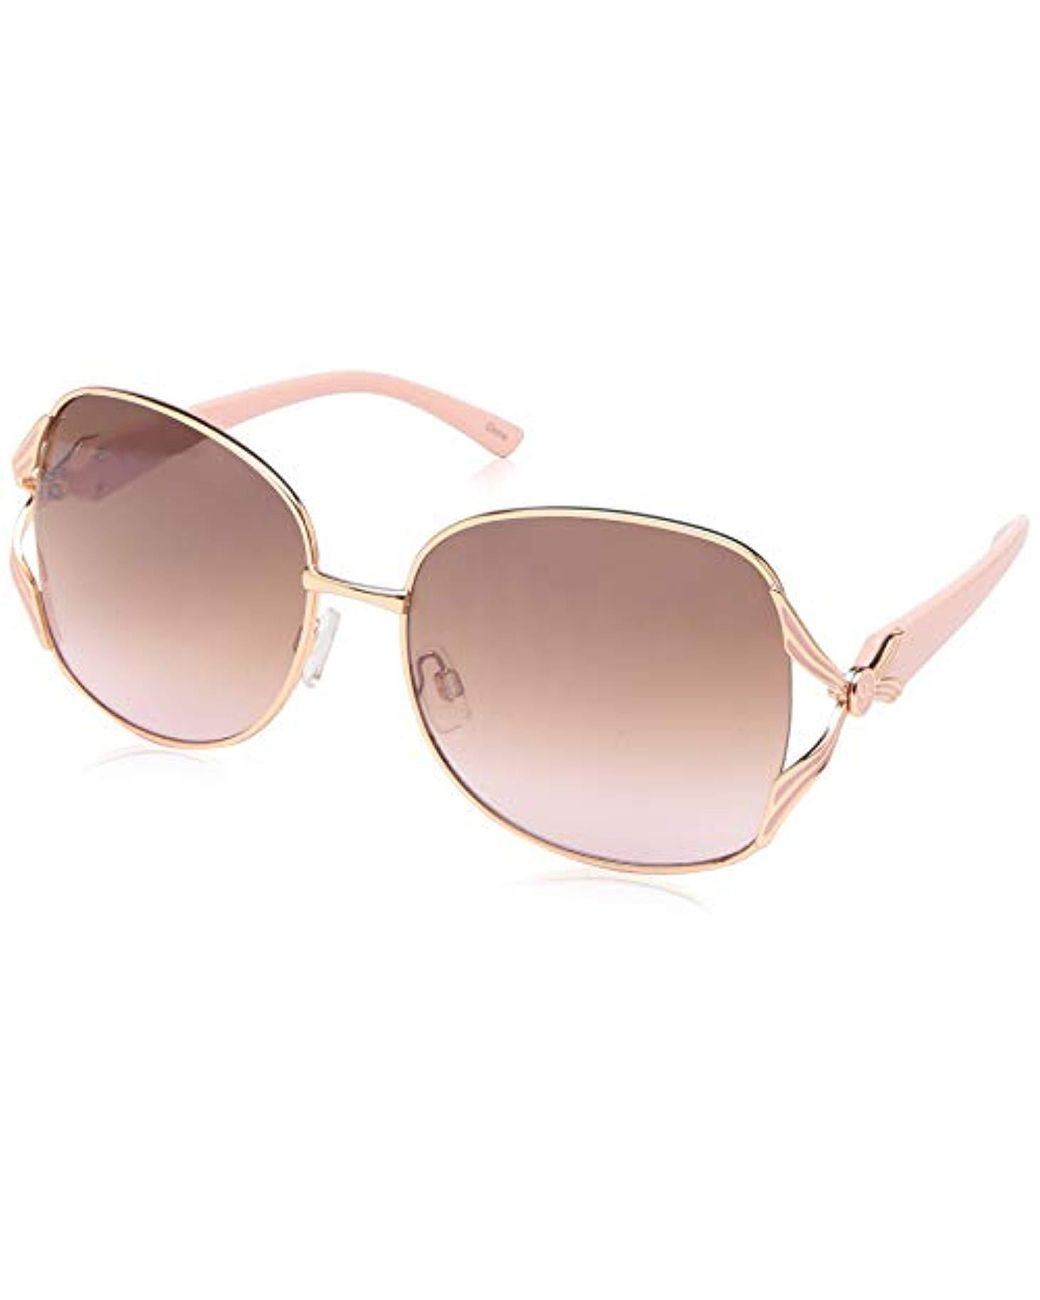 NEW Jessica Simpson Oversized Rose Gold & White Sunglasses J5254 